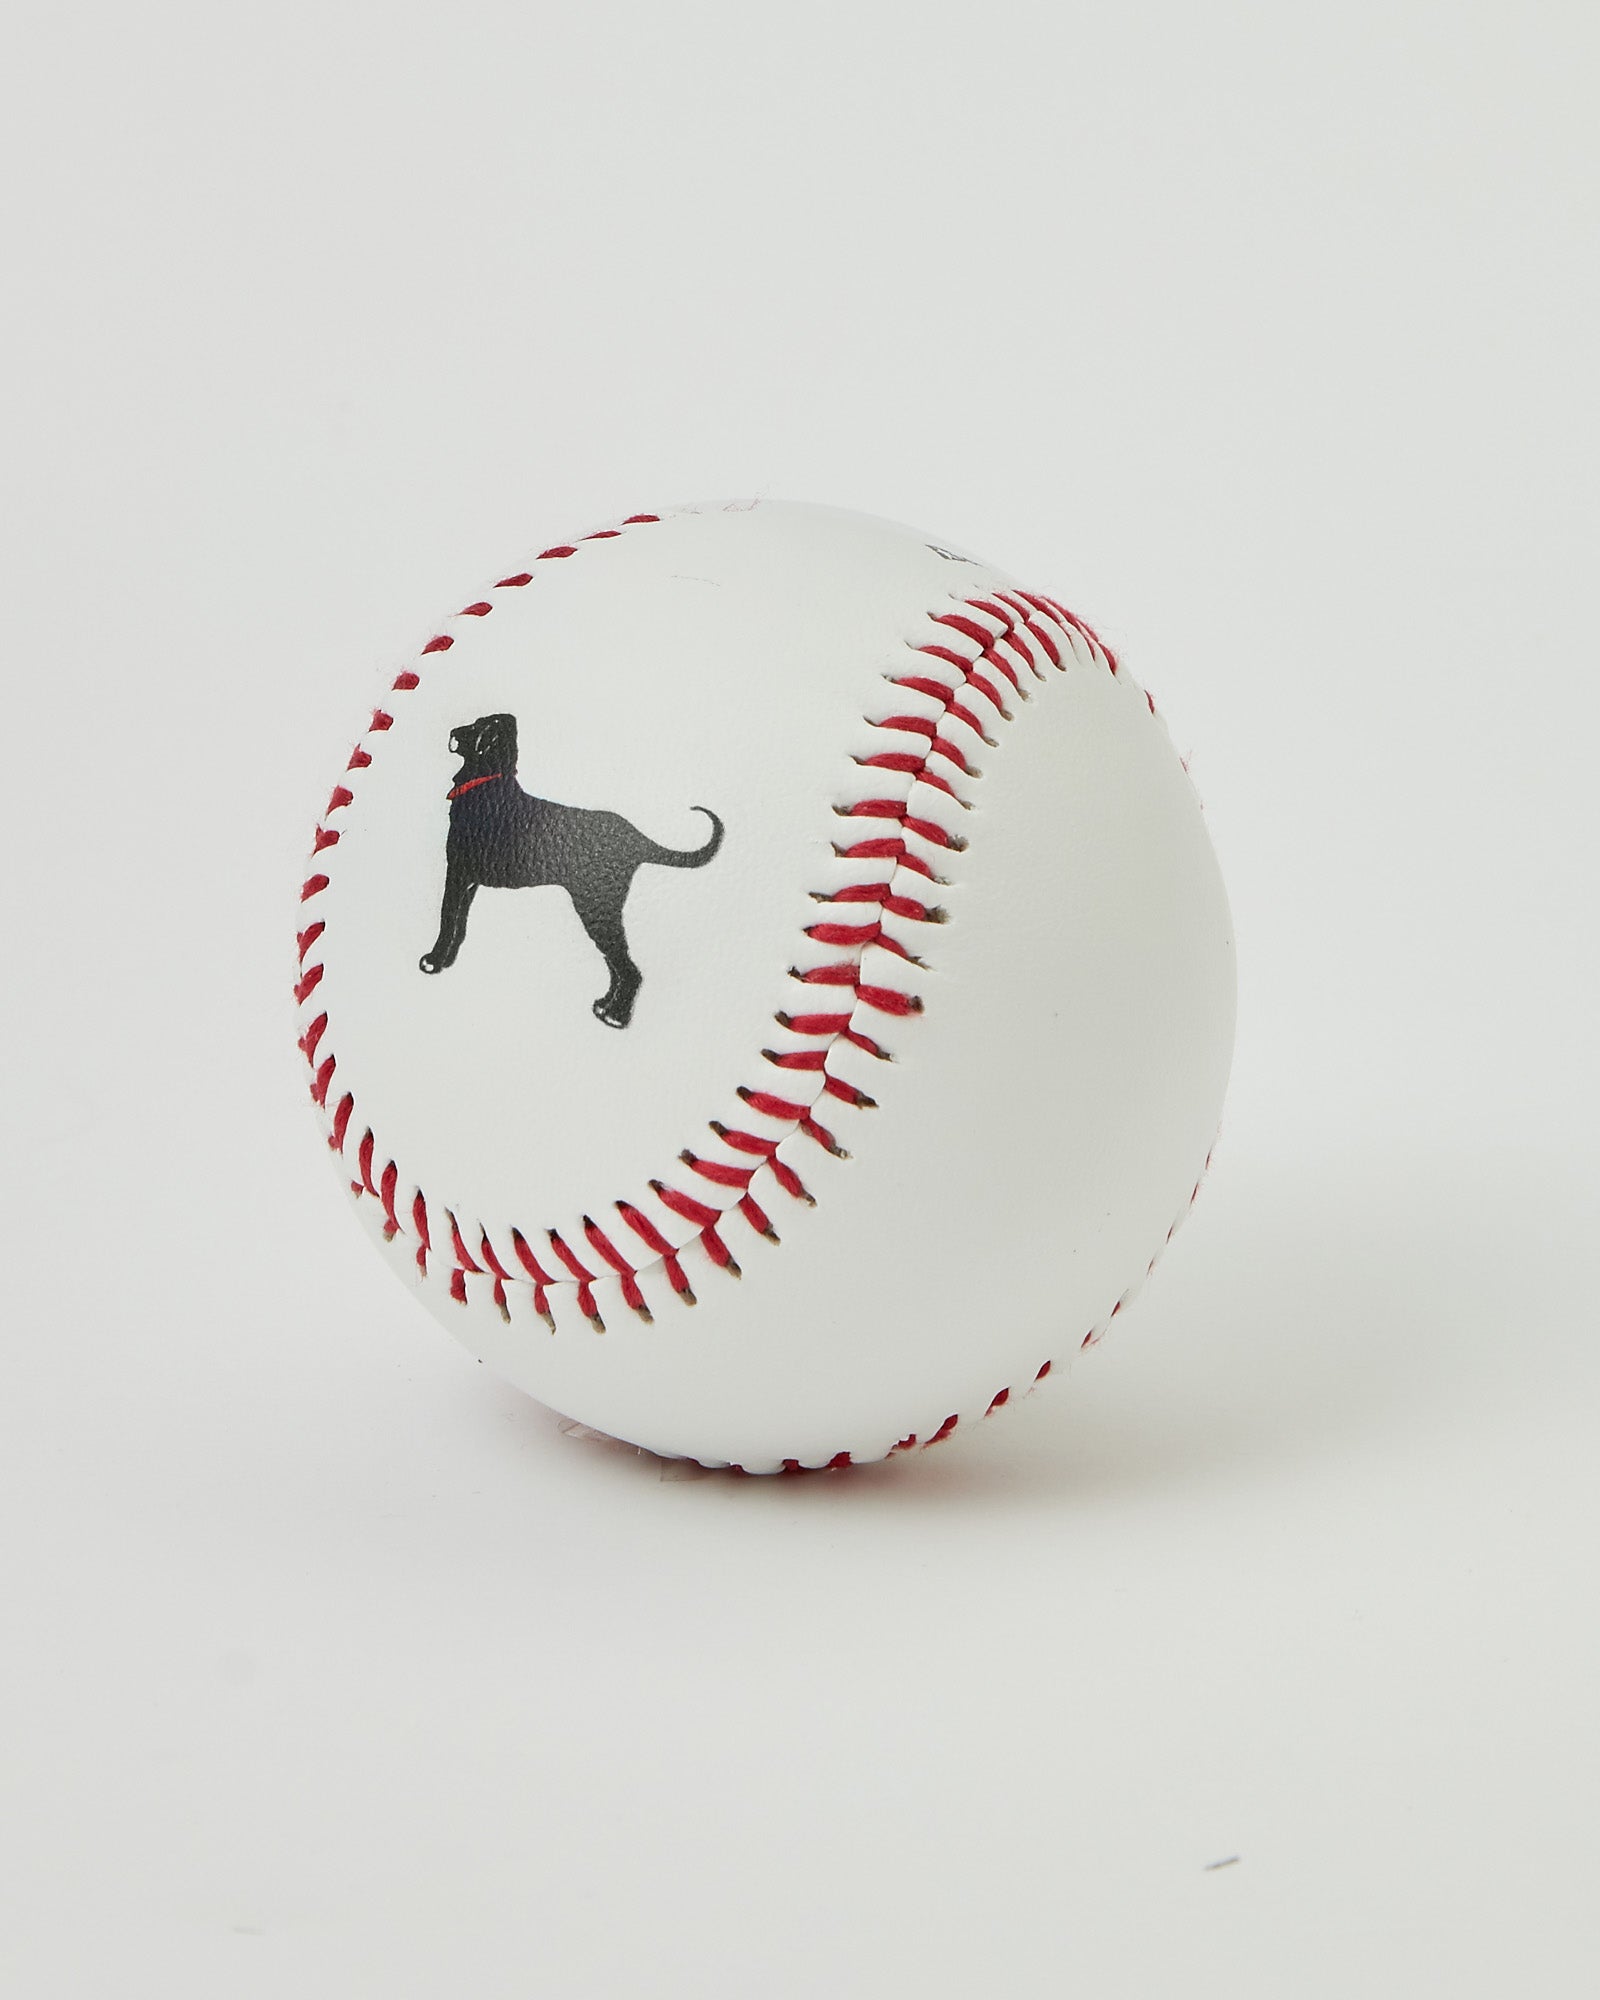 Black Dog Official Baseball – The Black Dog